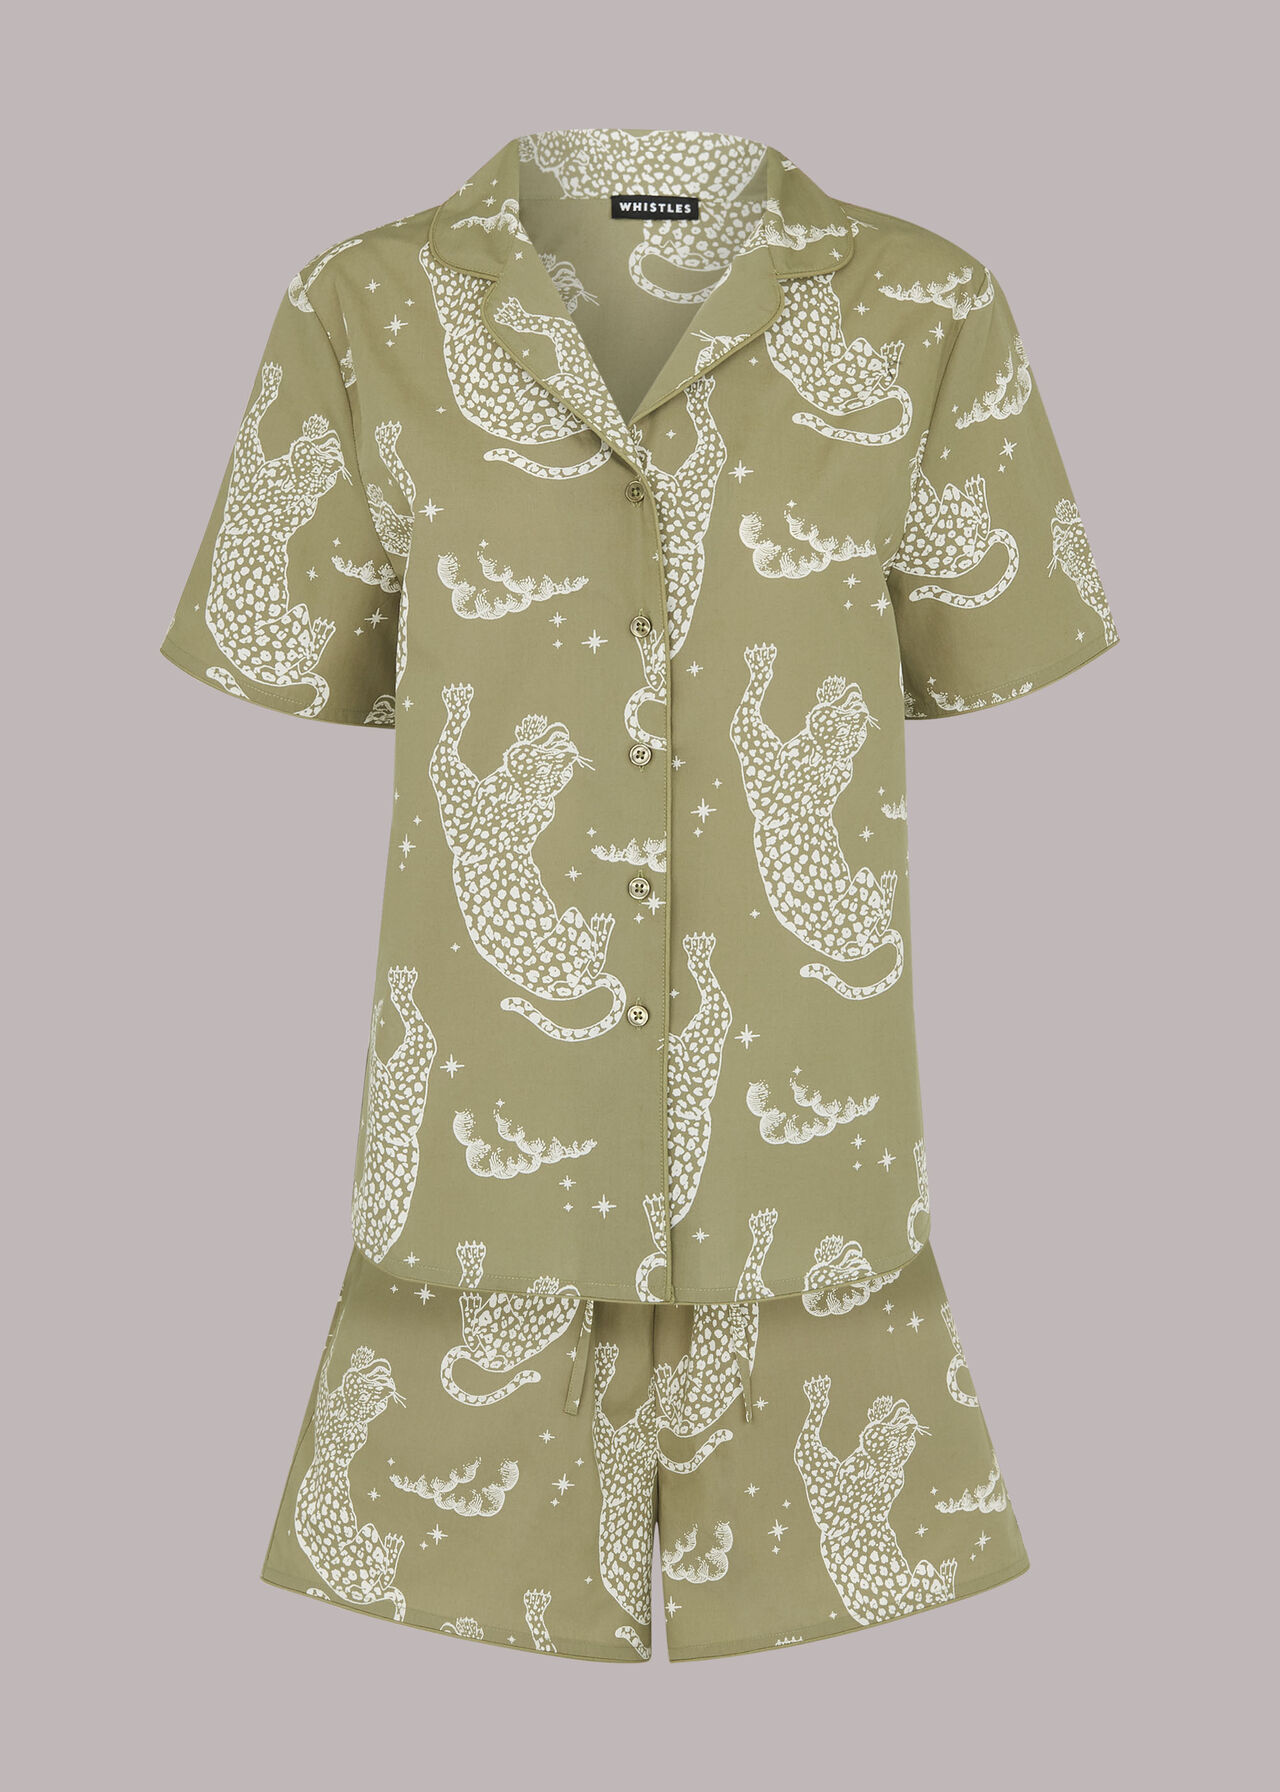 Starred Leopard Pyjamas